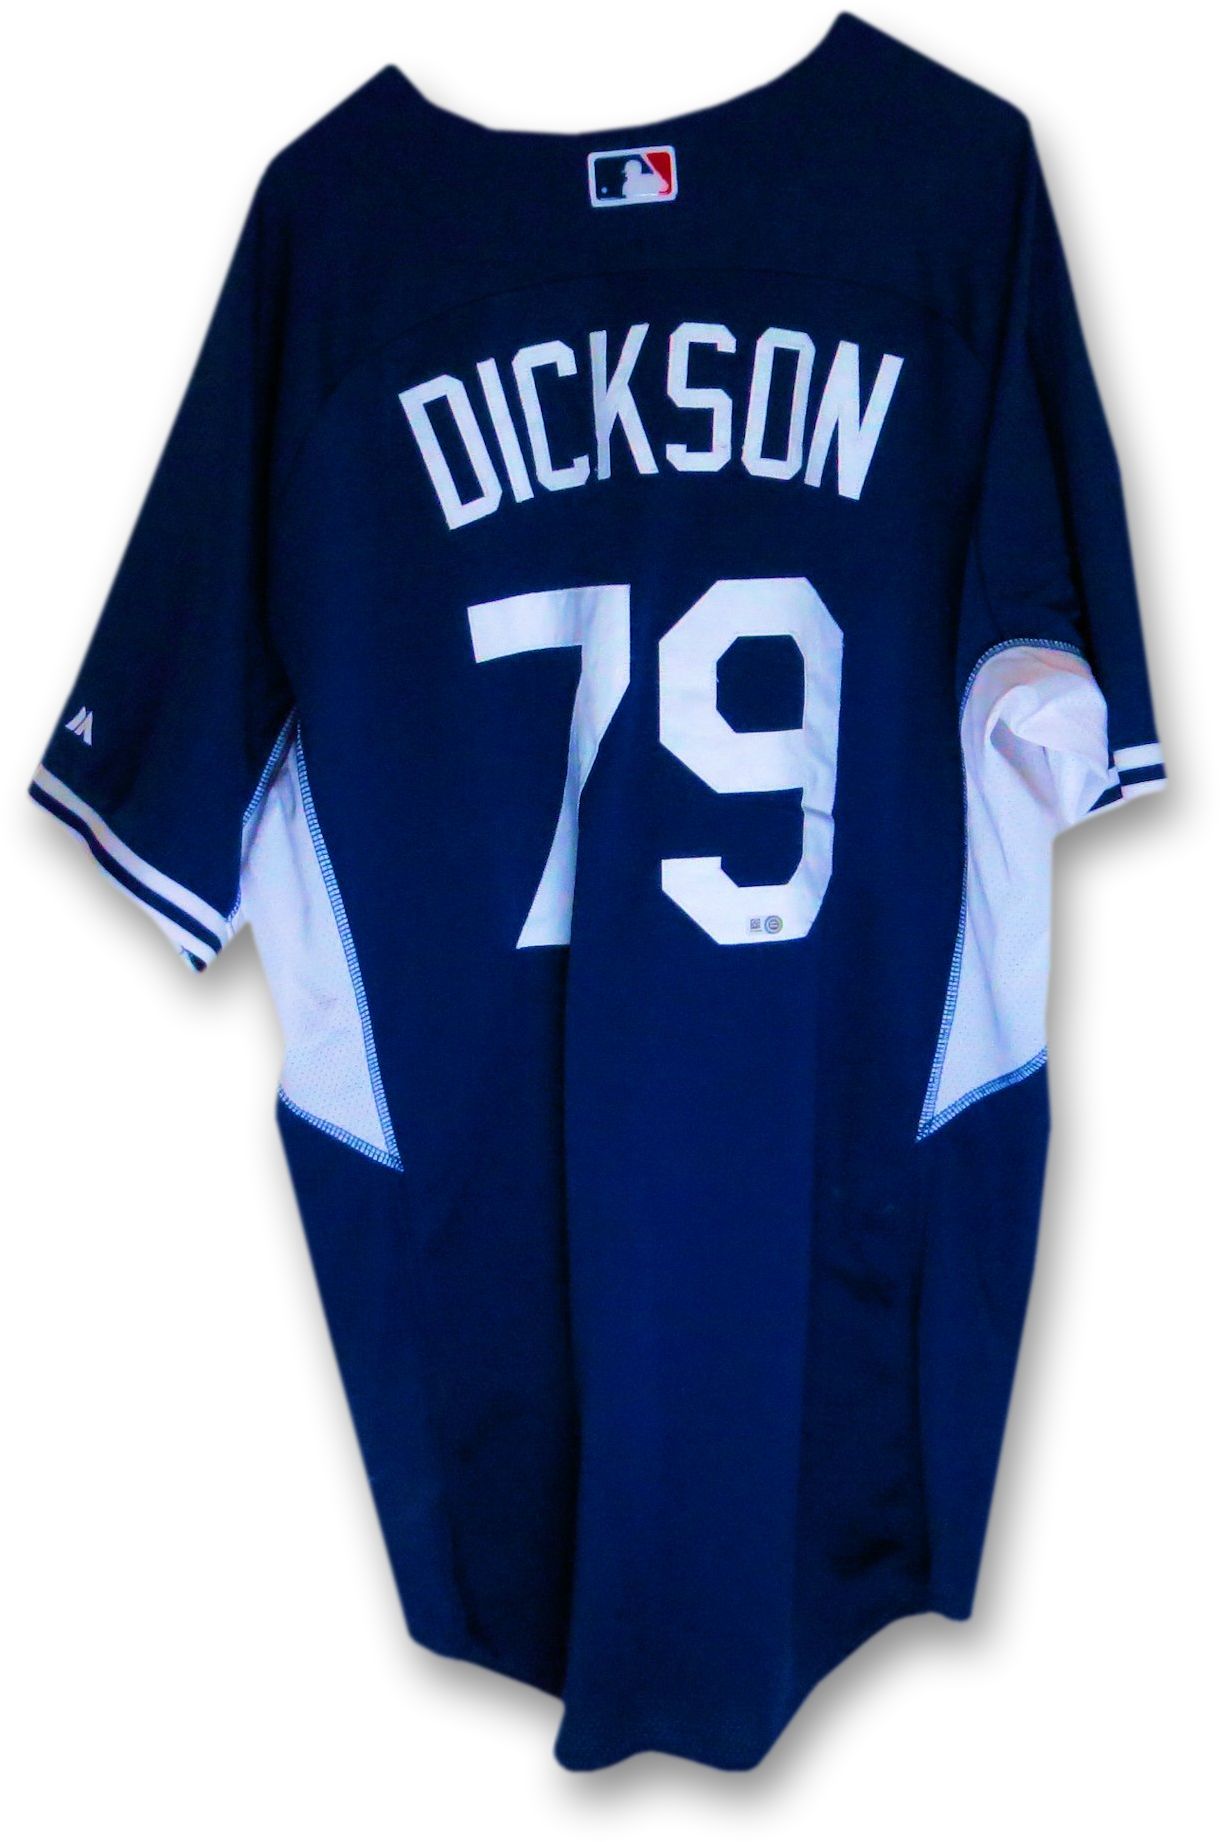 O'Koyea Dickson Dodgers Team Issue Batting Practice Jersey #79 MLB HZ533462  - Cardboard Legends